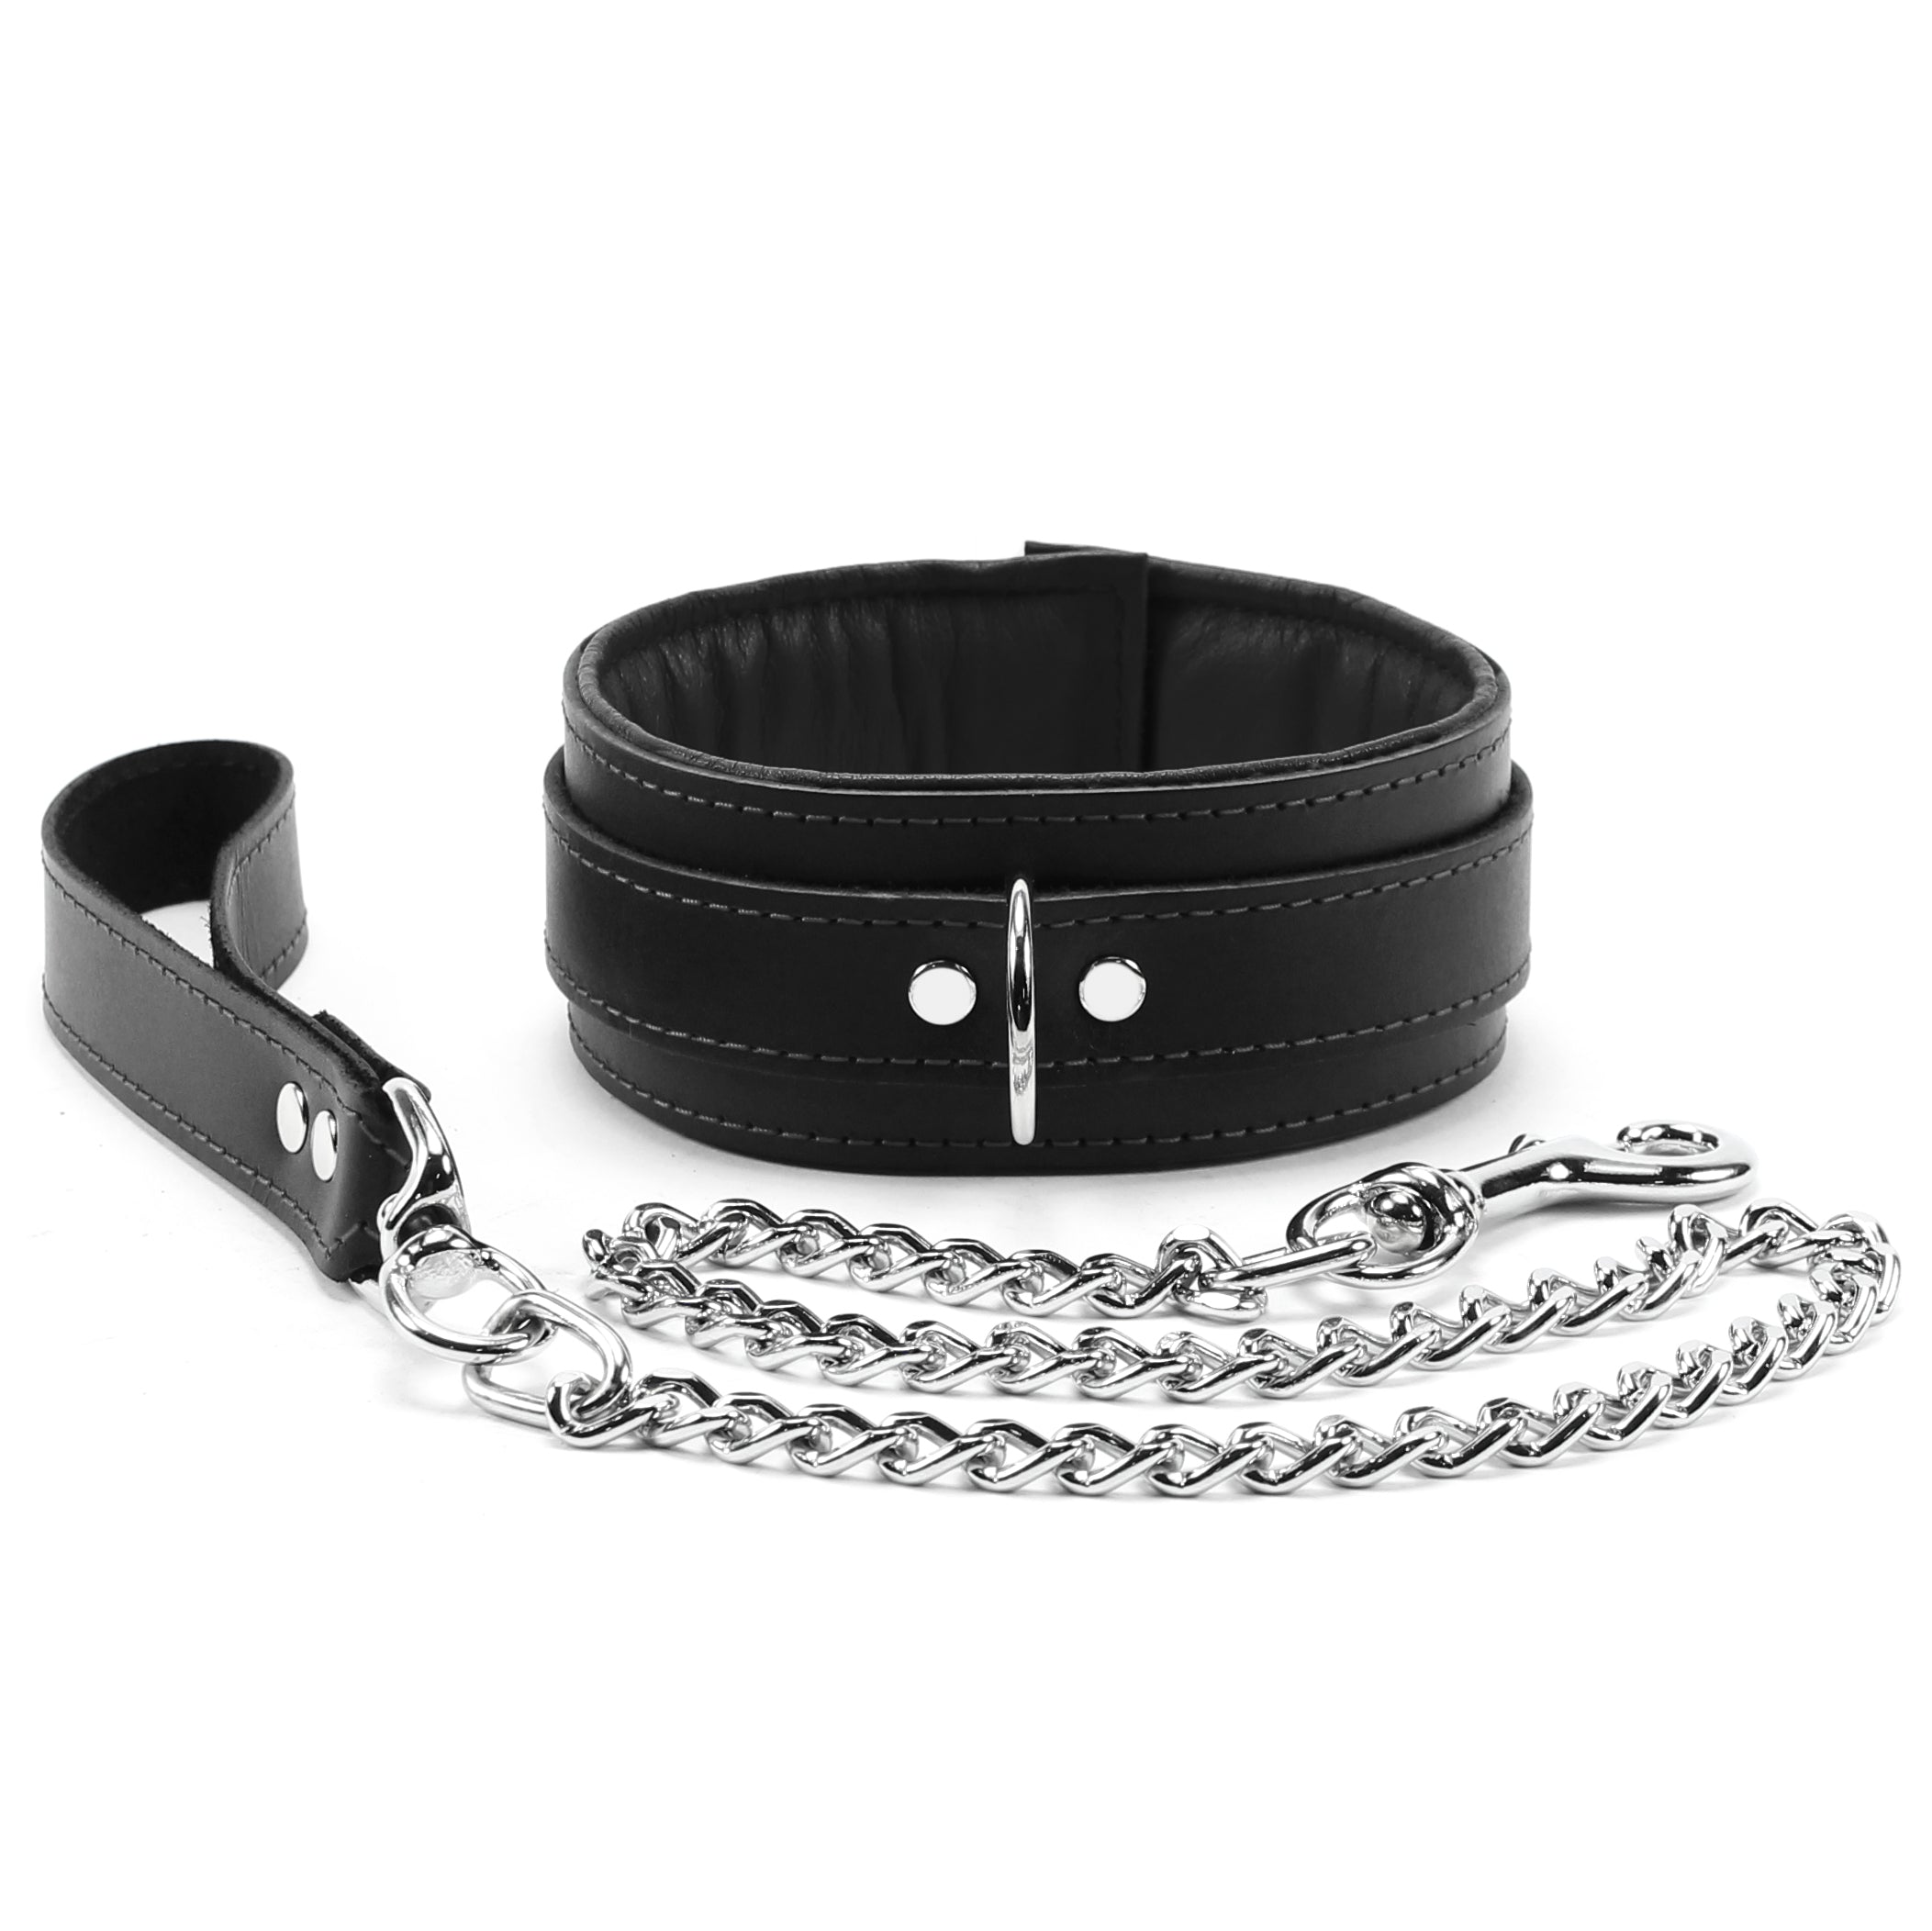 Black Leather Dog Collar and Leash Set - SUPERSTAR